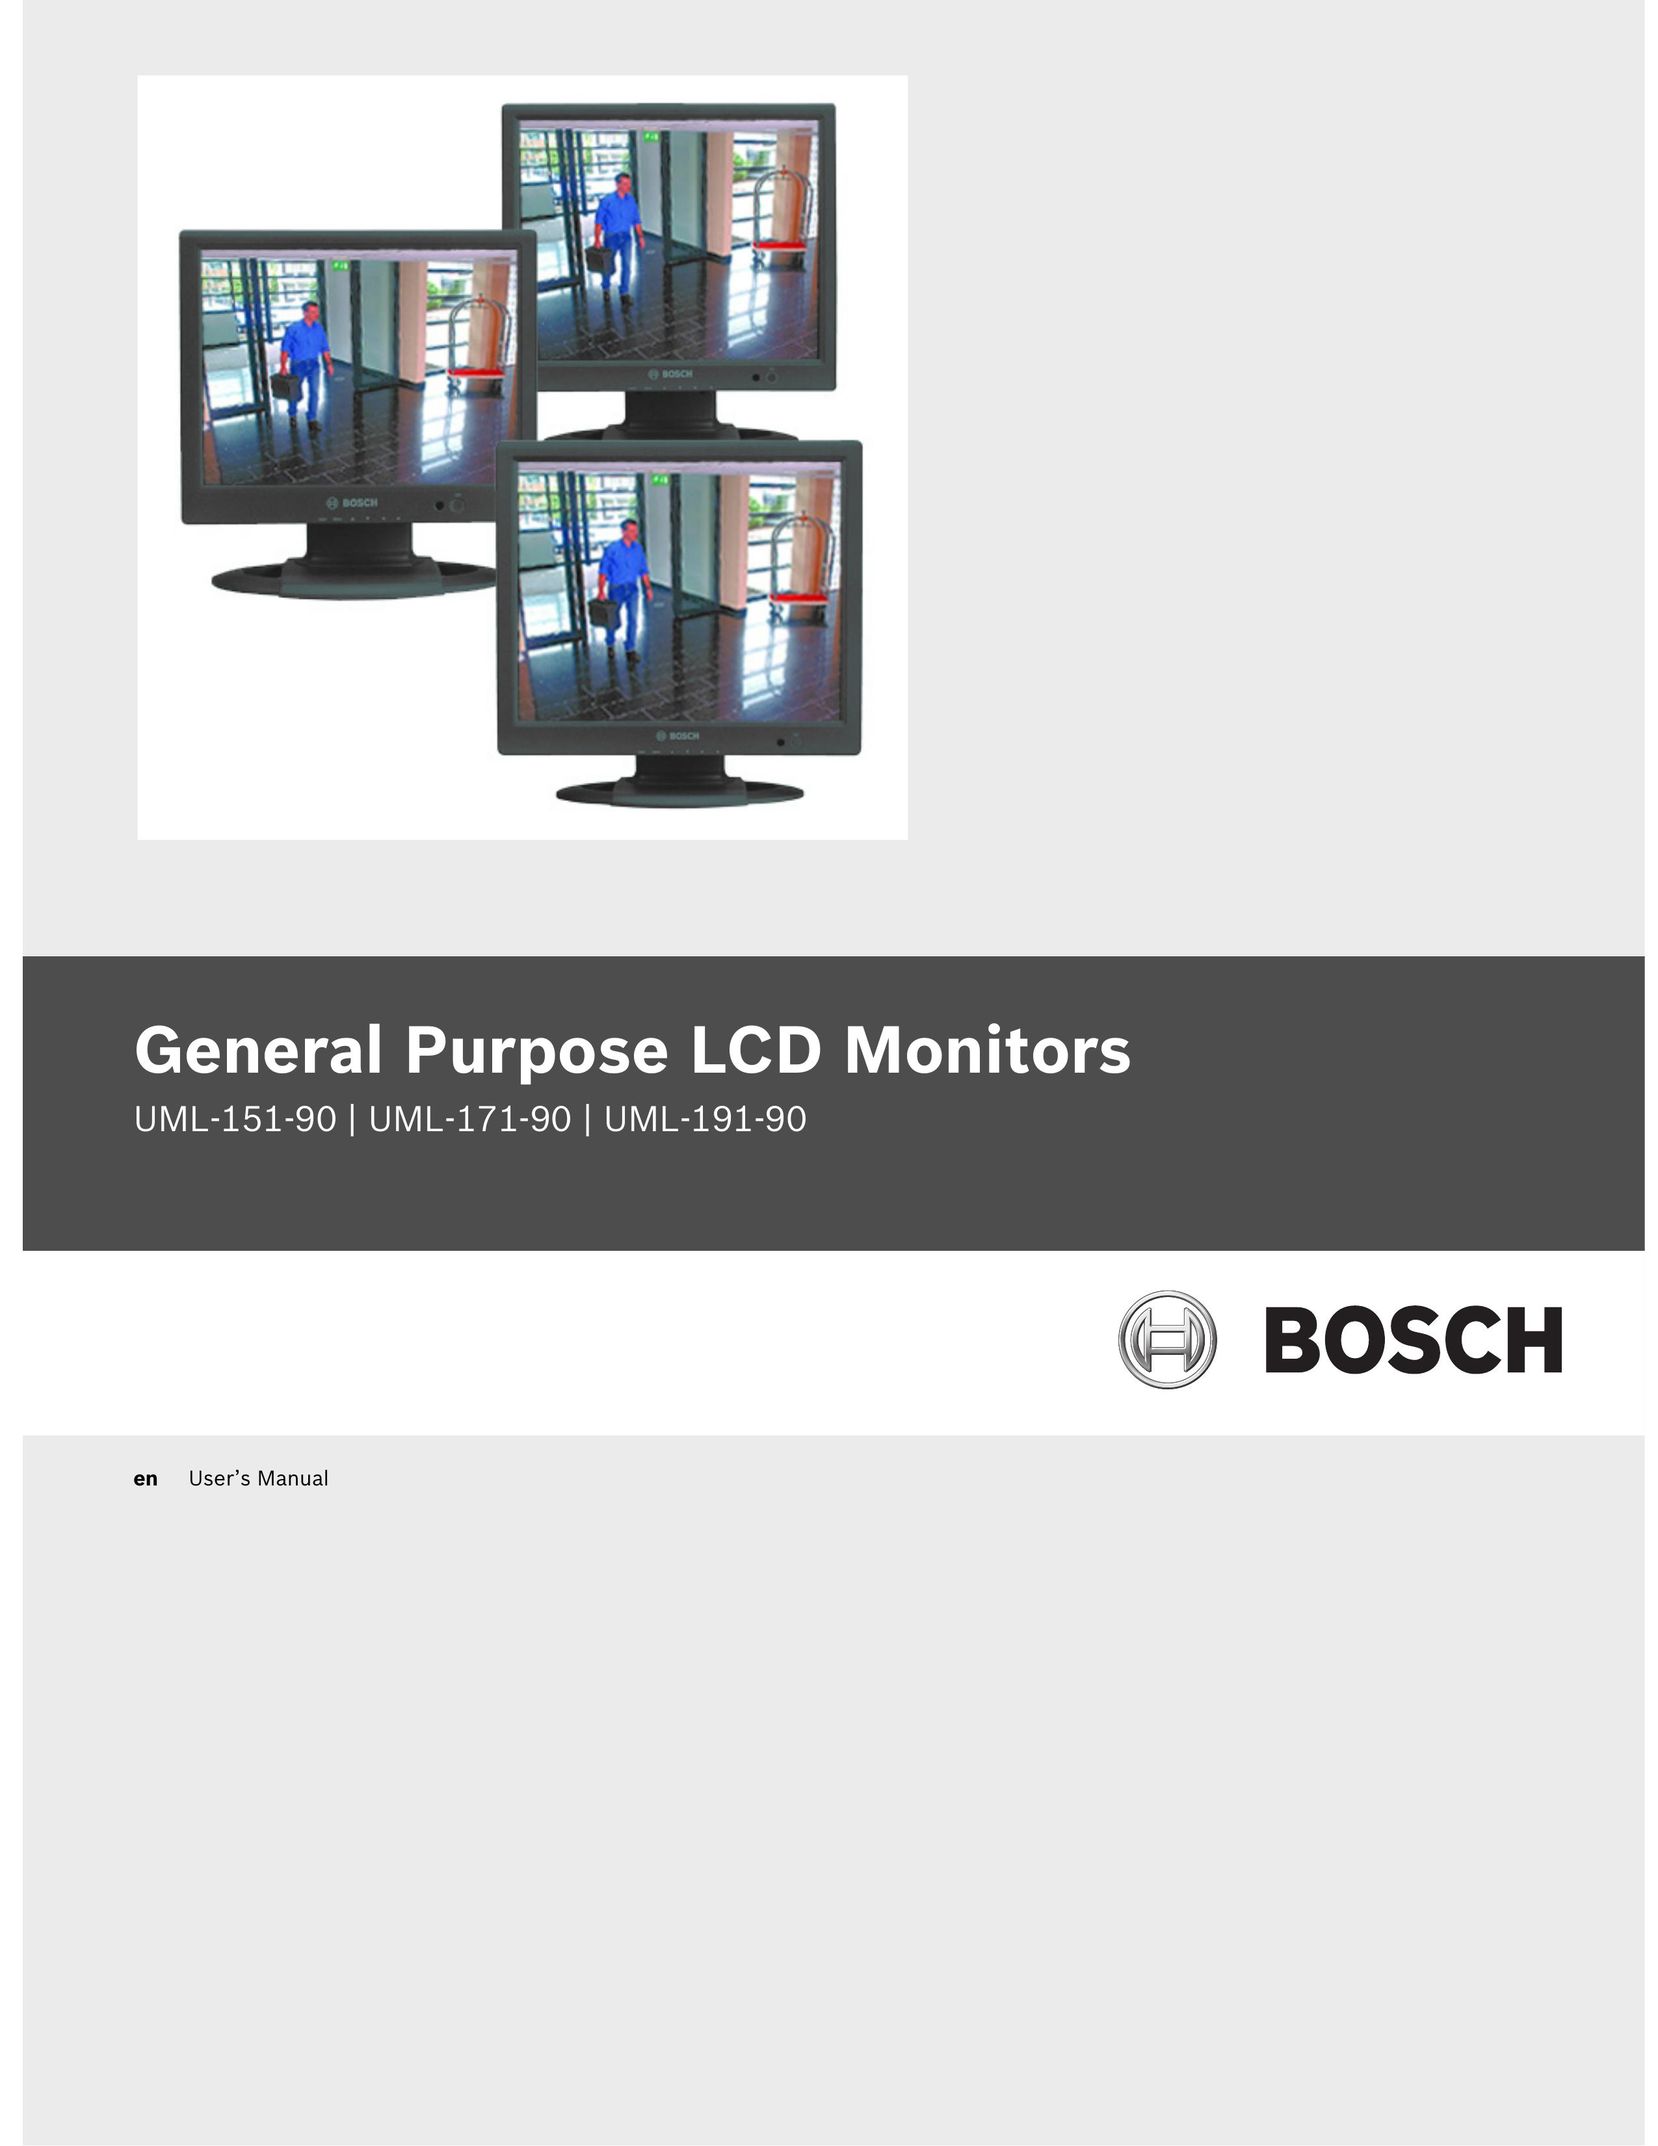 Bosch Appliances UML-191-90 Computer Monitor User Manual